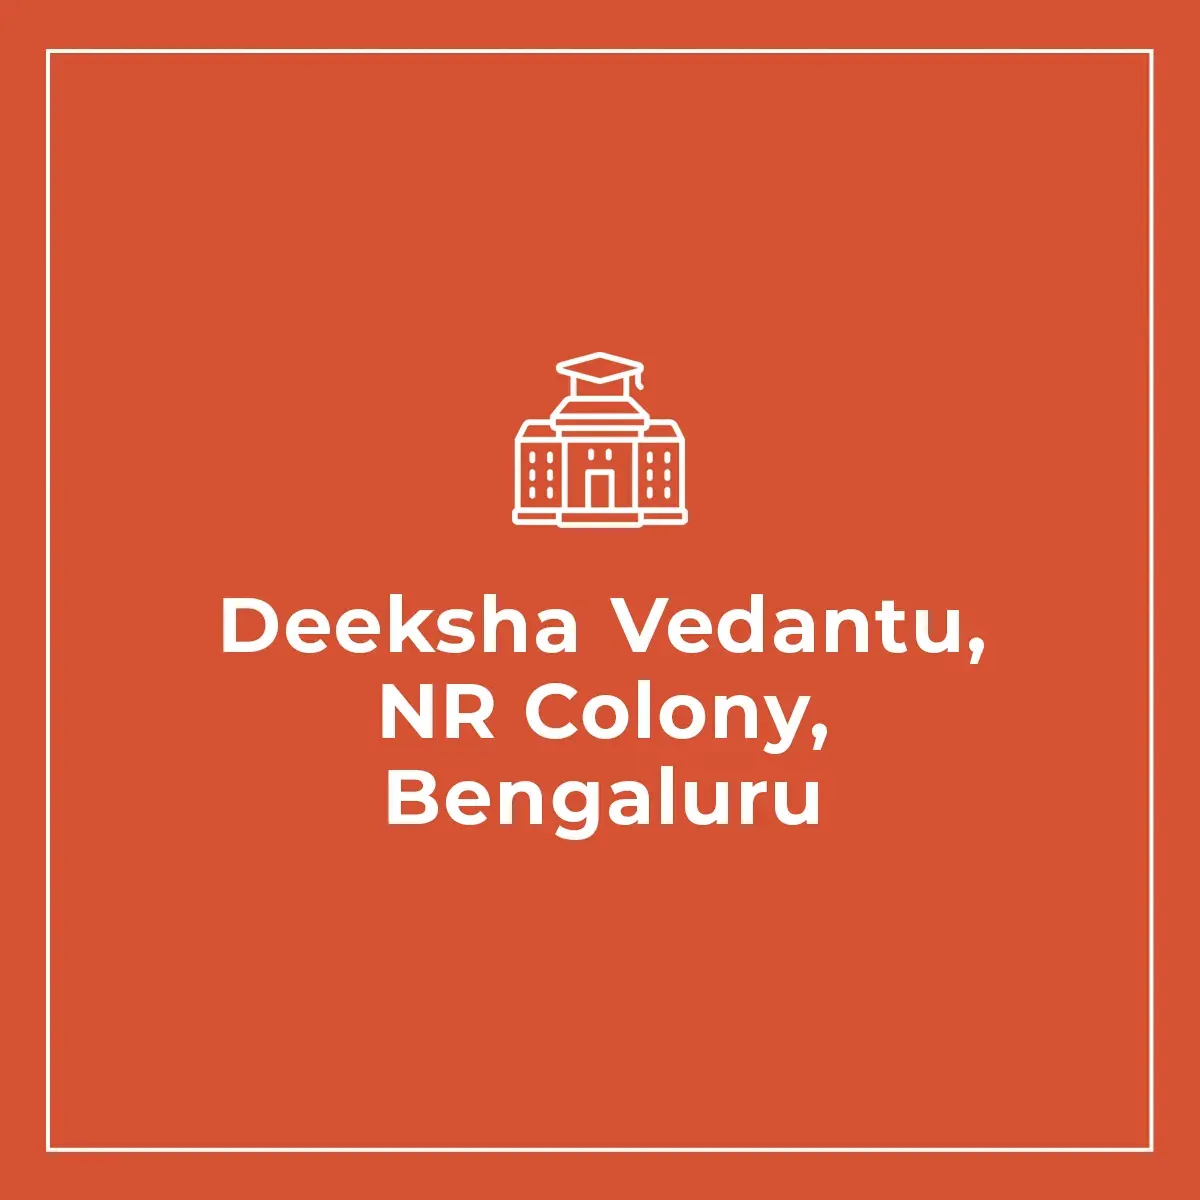 Deeksha Vedantu, NR Colony, Bengaluru